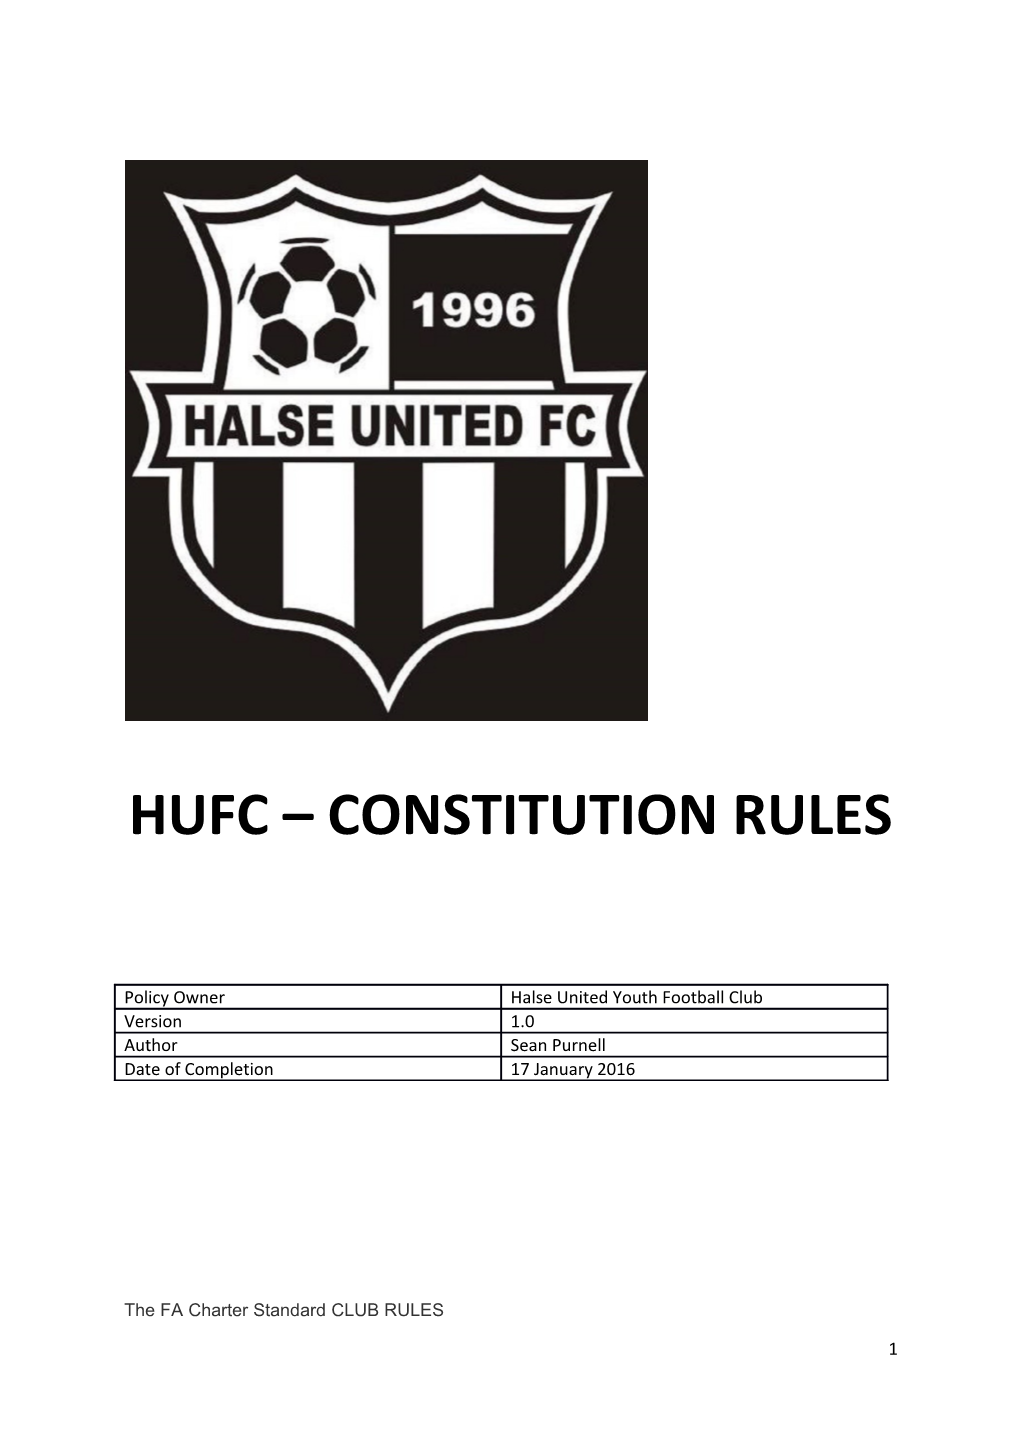 The FA Charter Standard CLUB RULES